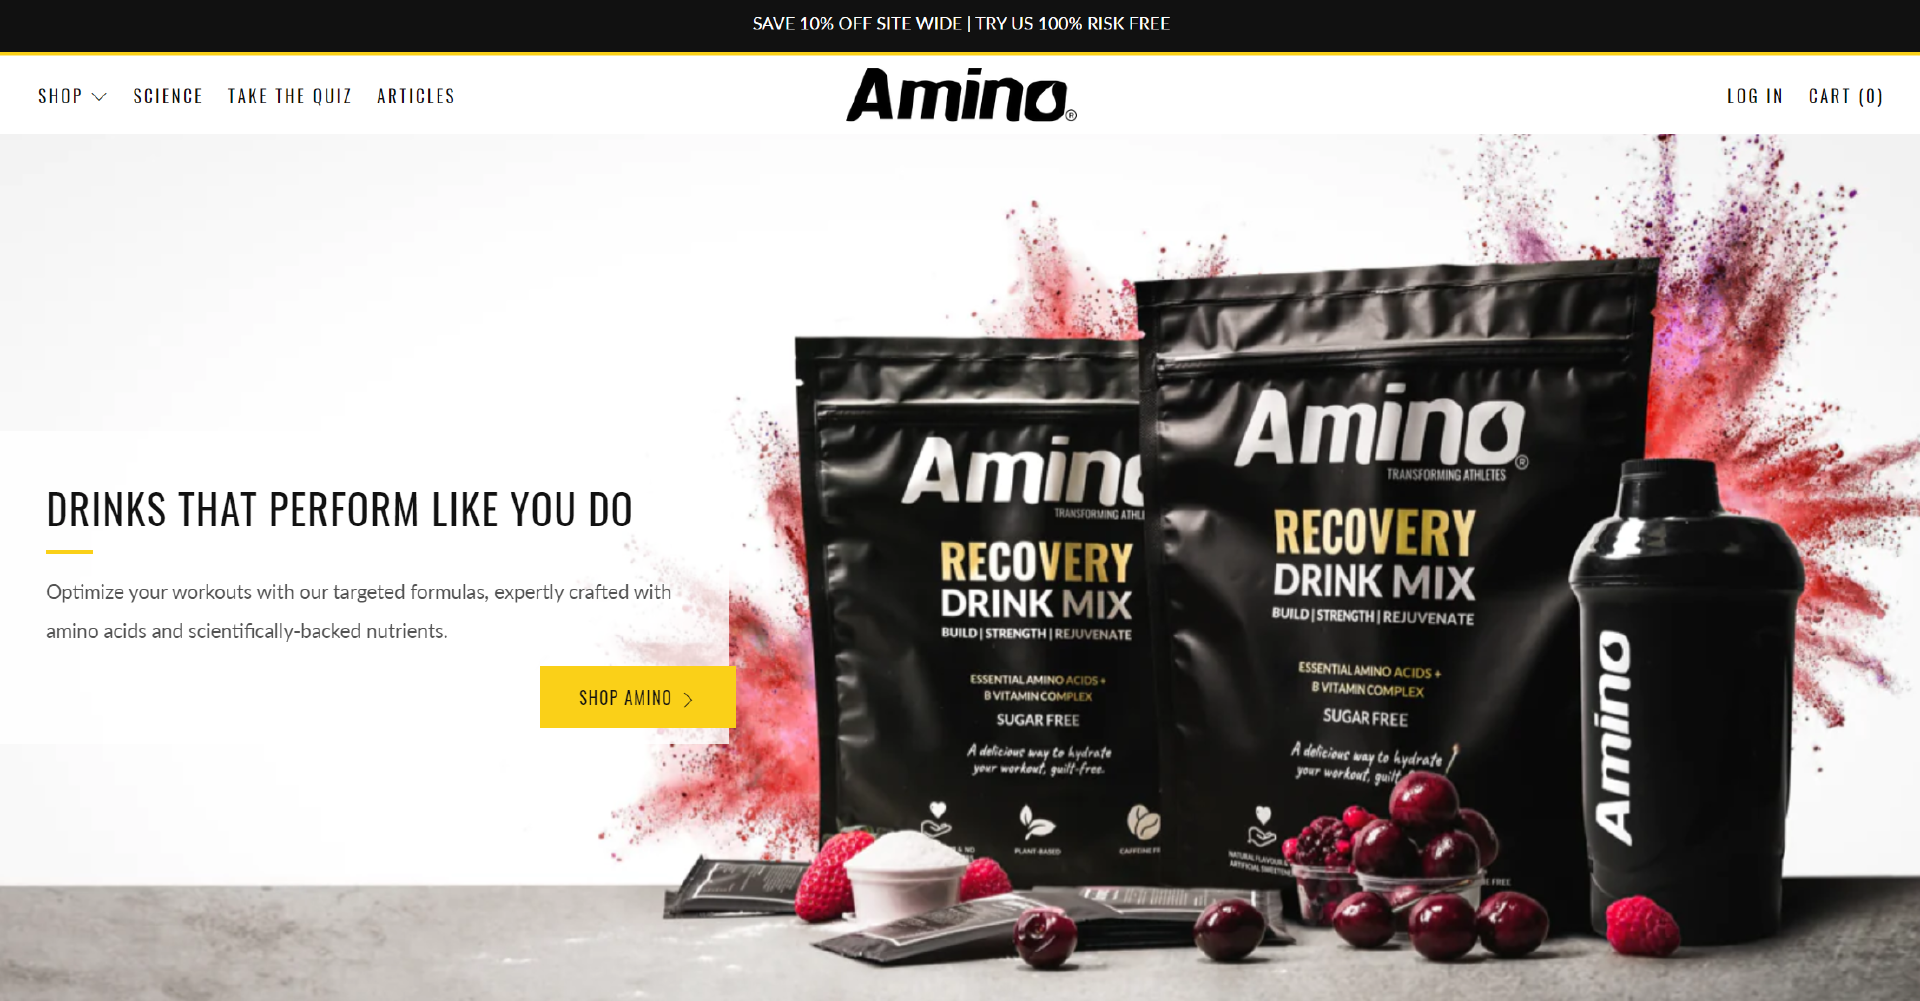 DTC功能饮料品牌Amino Drinks获30万英镑融资